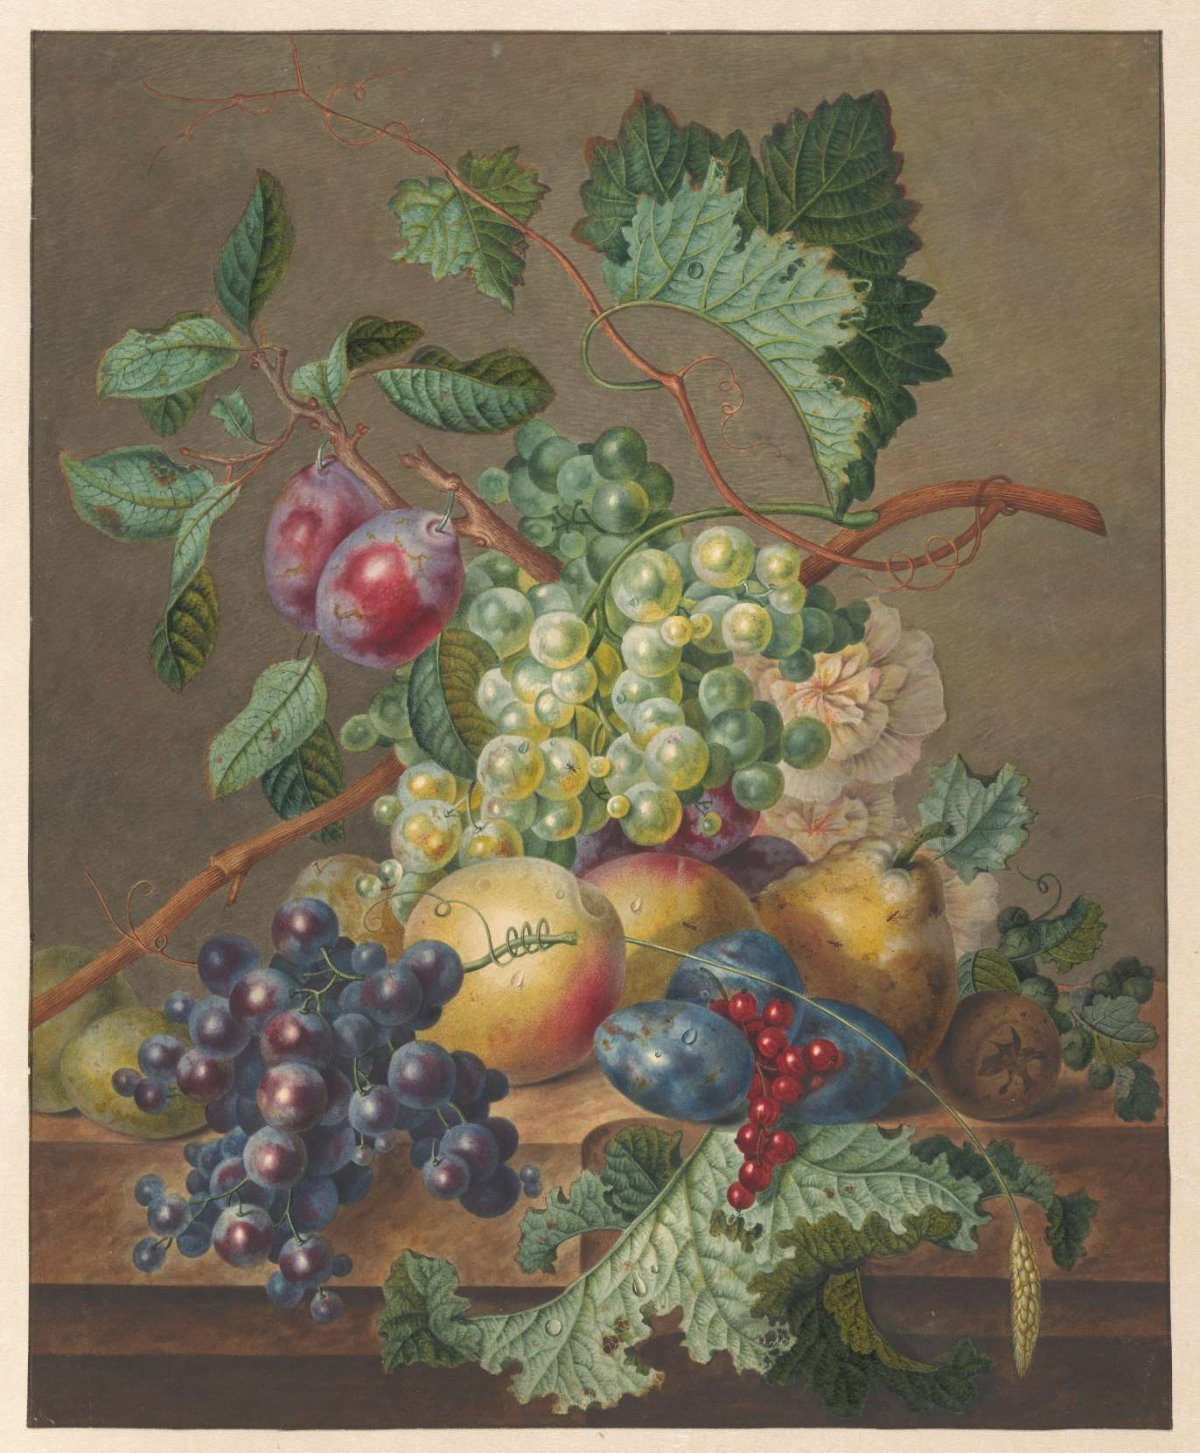 Still life with fruits, Jan de Bruyn, 1700 - 1800